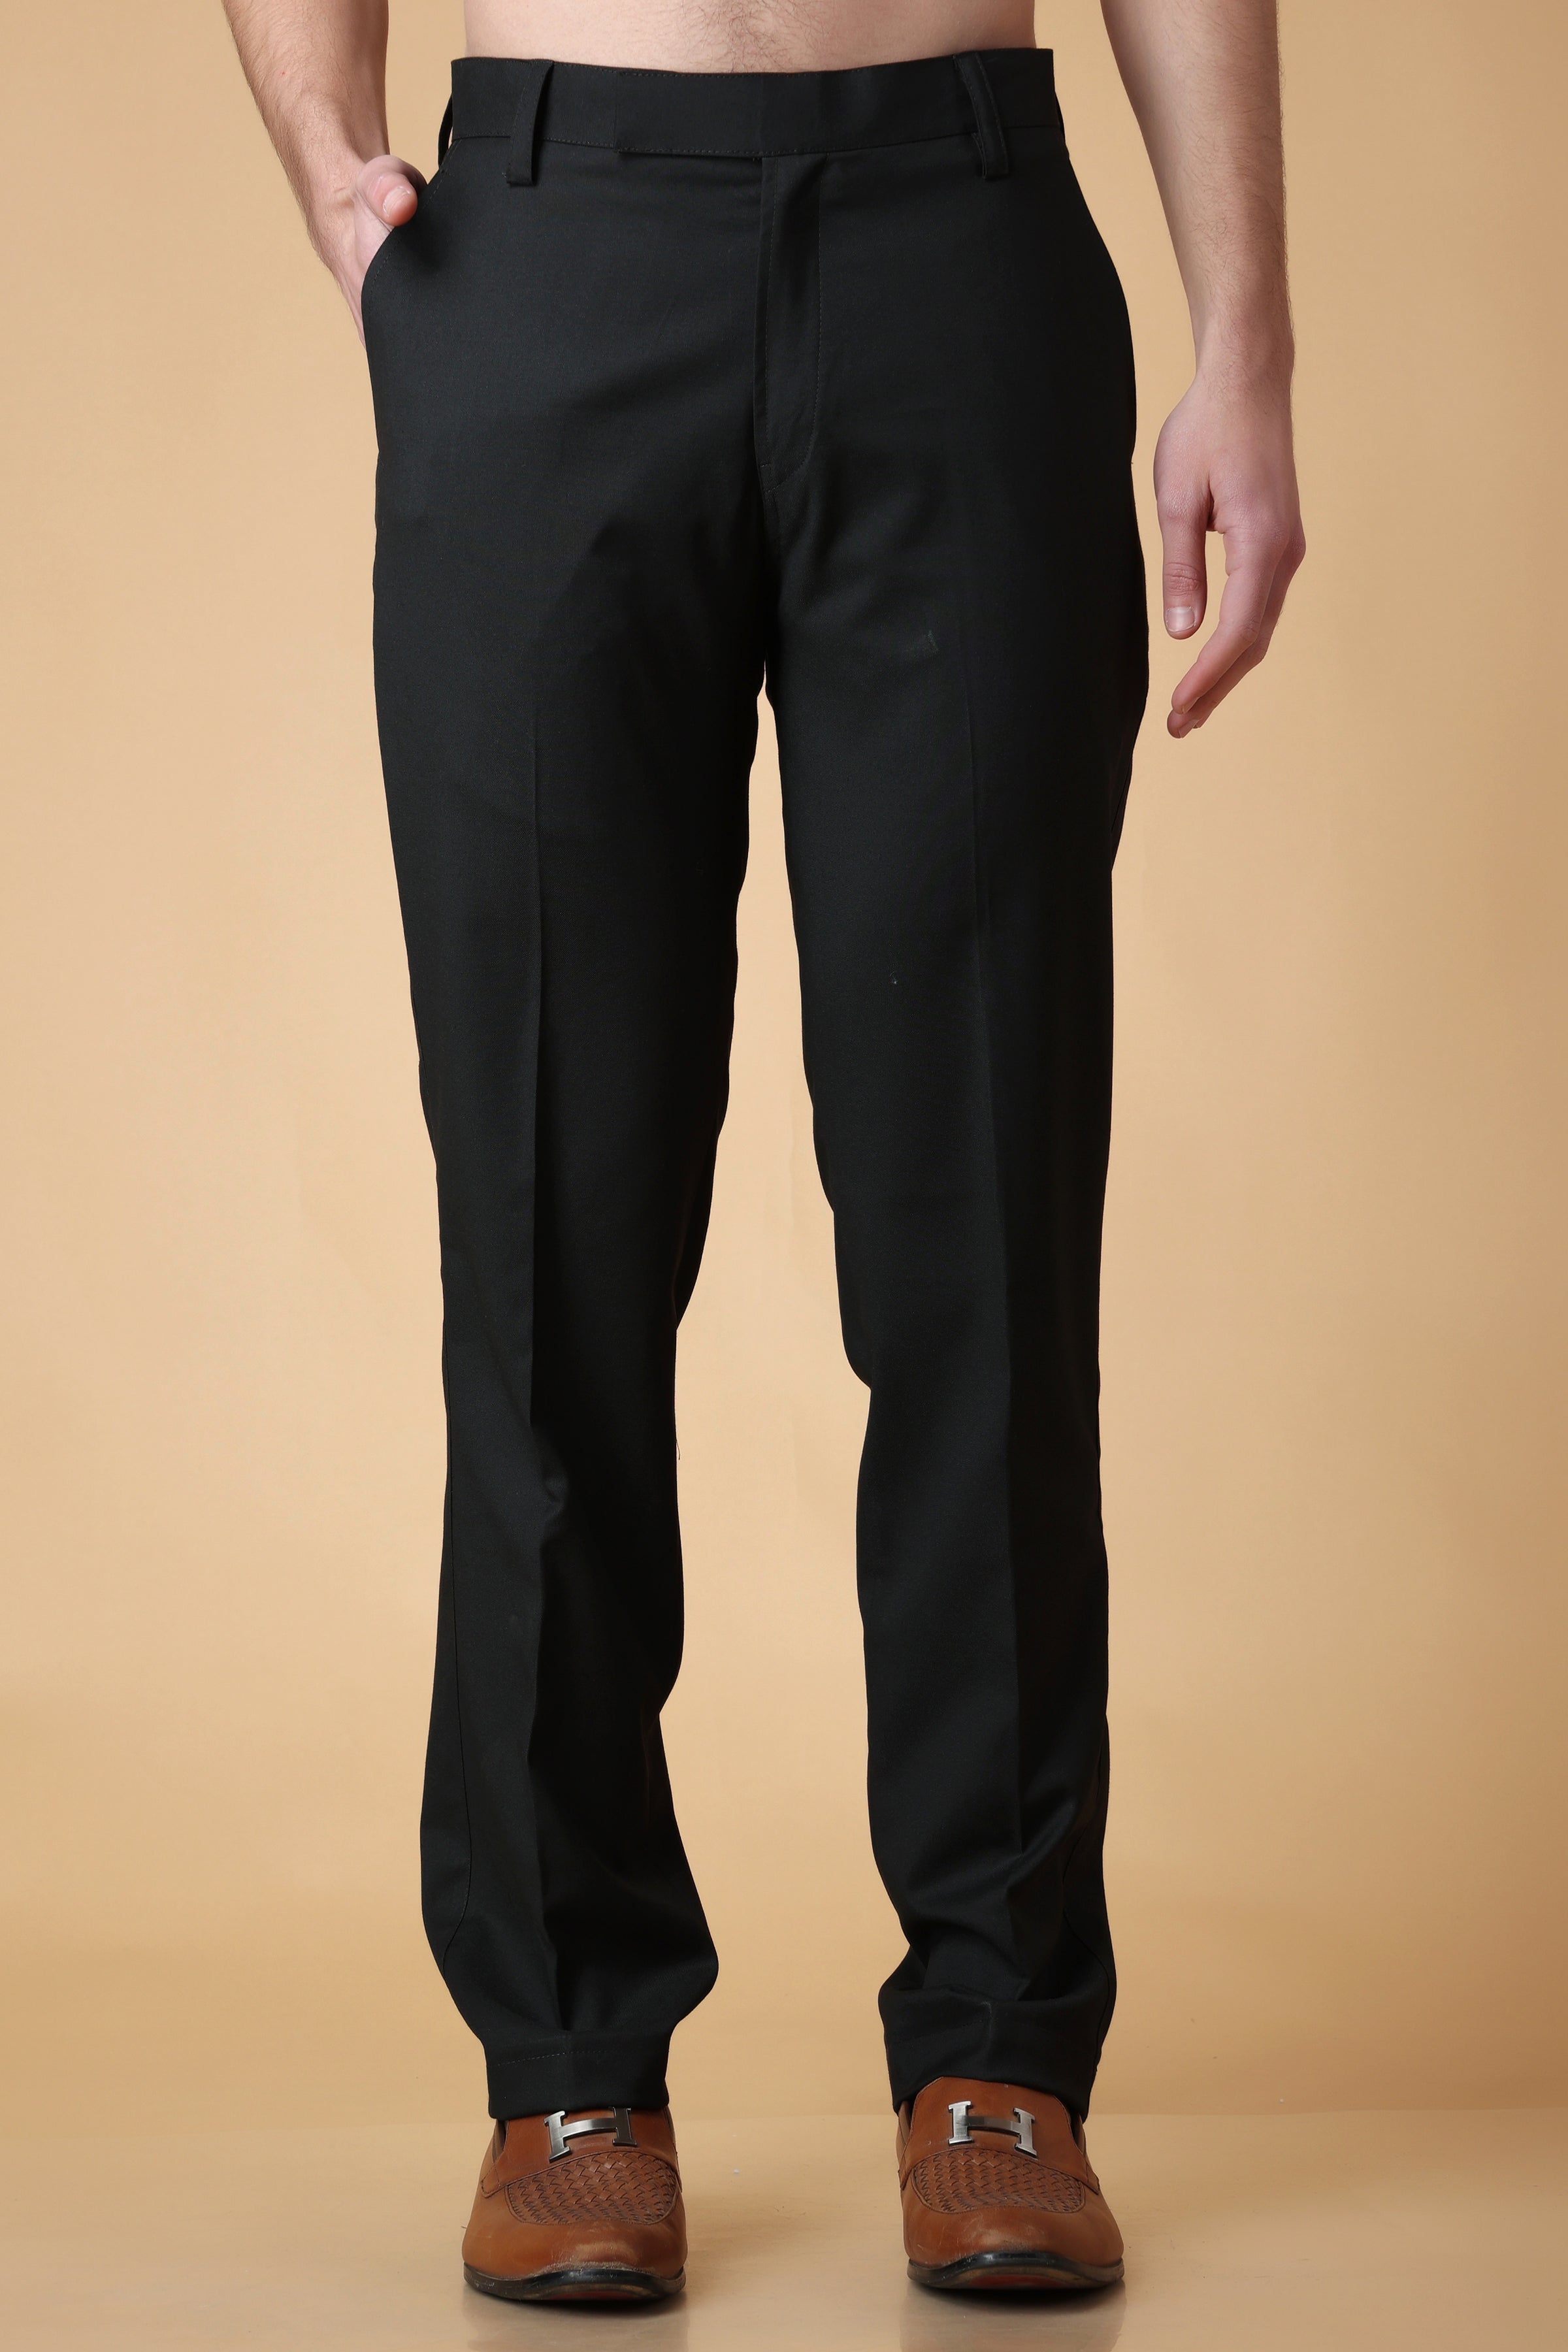 Buy Full Length Formal Pants with Button Closure | Splash UAE